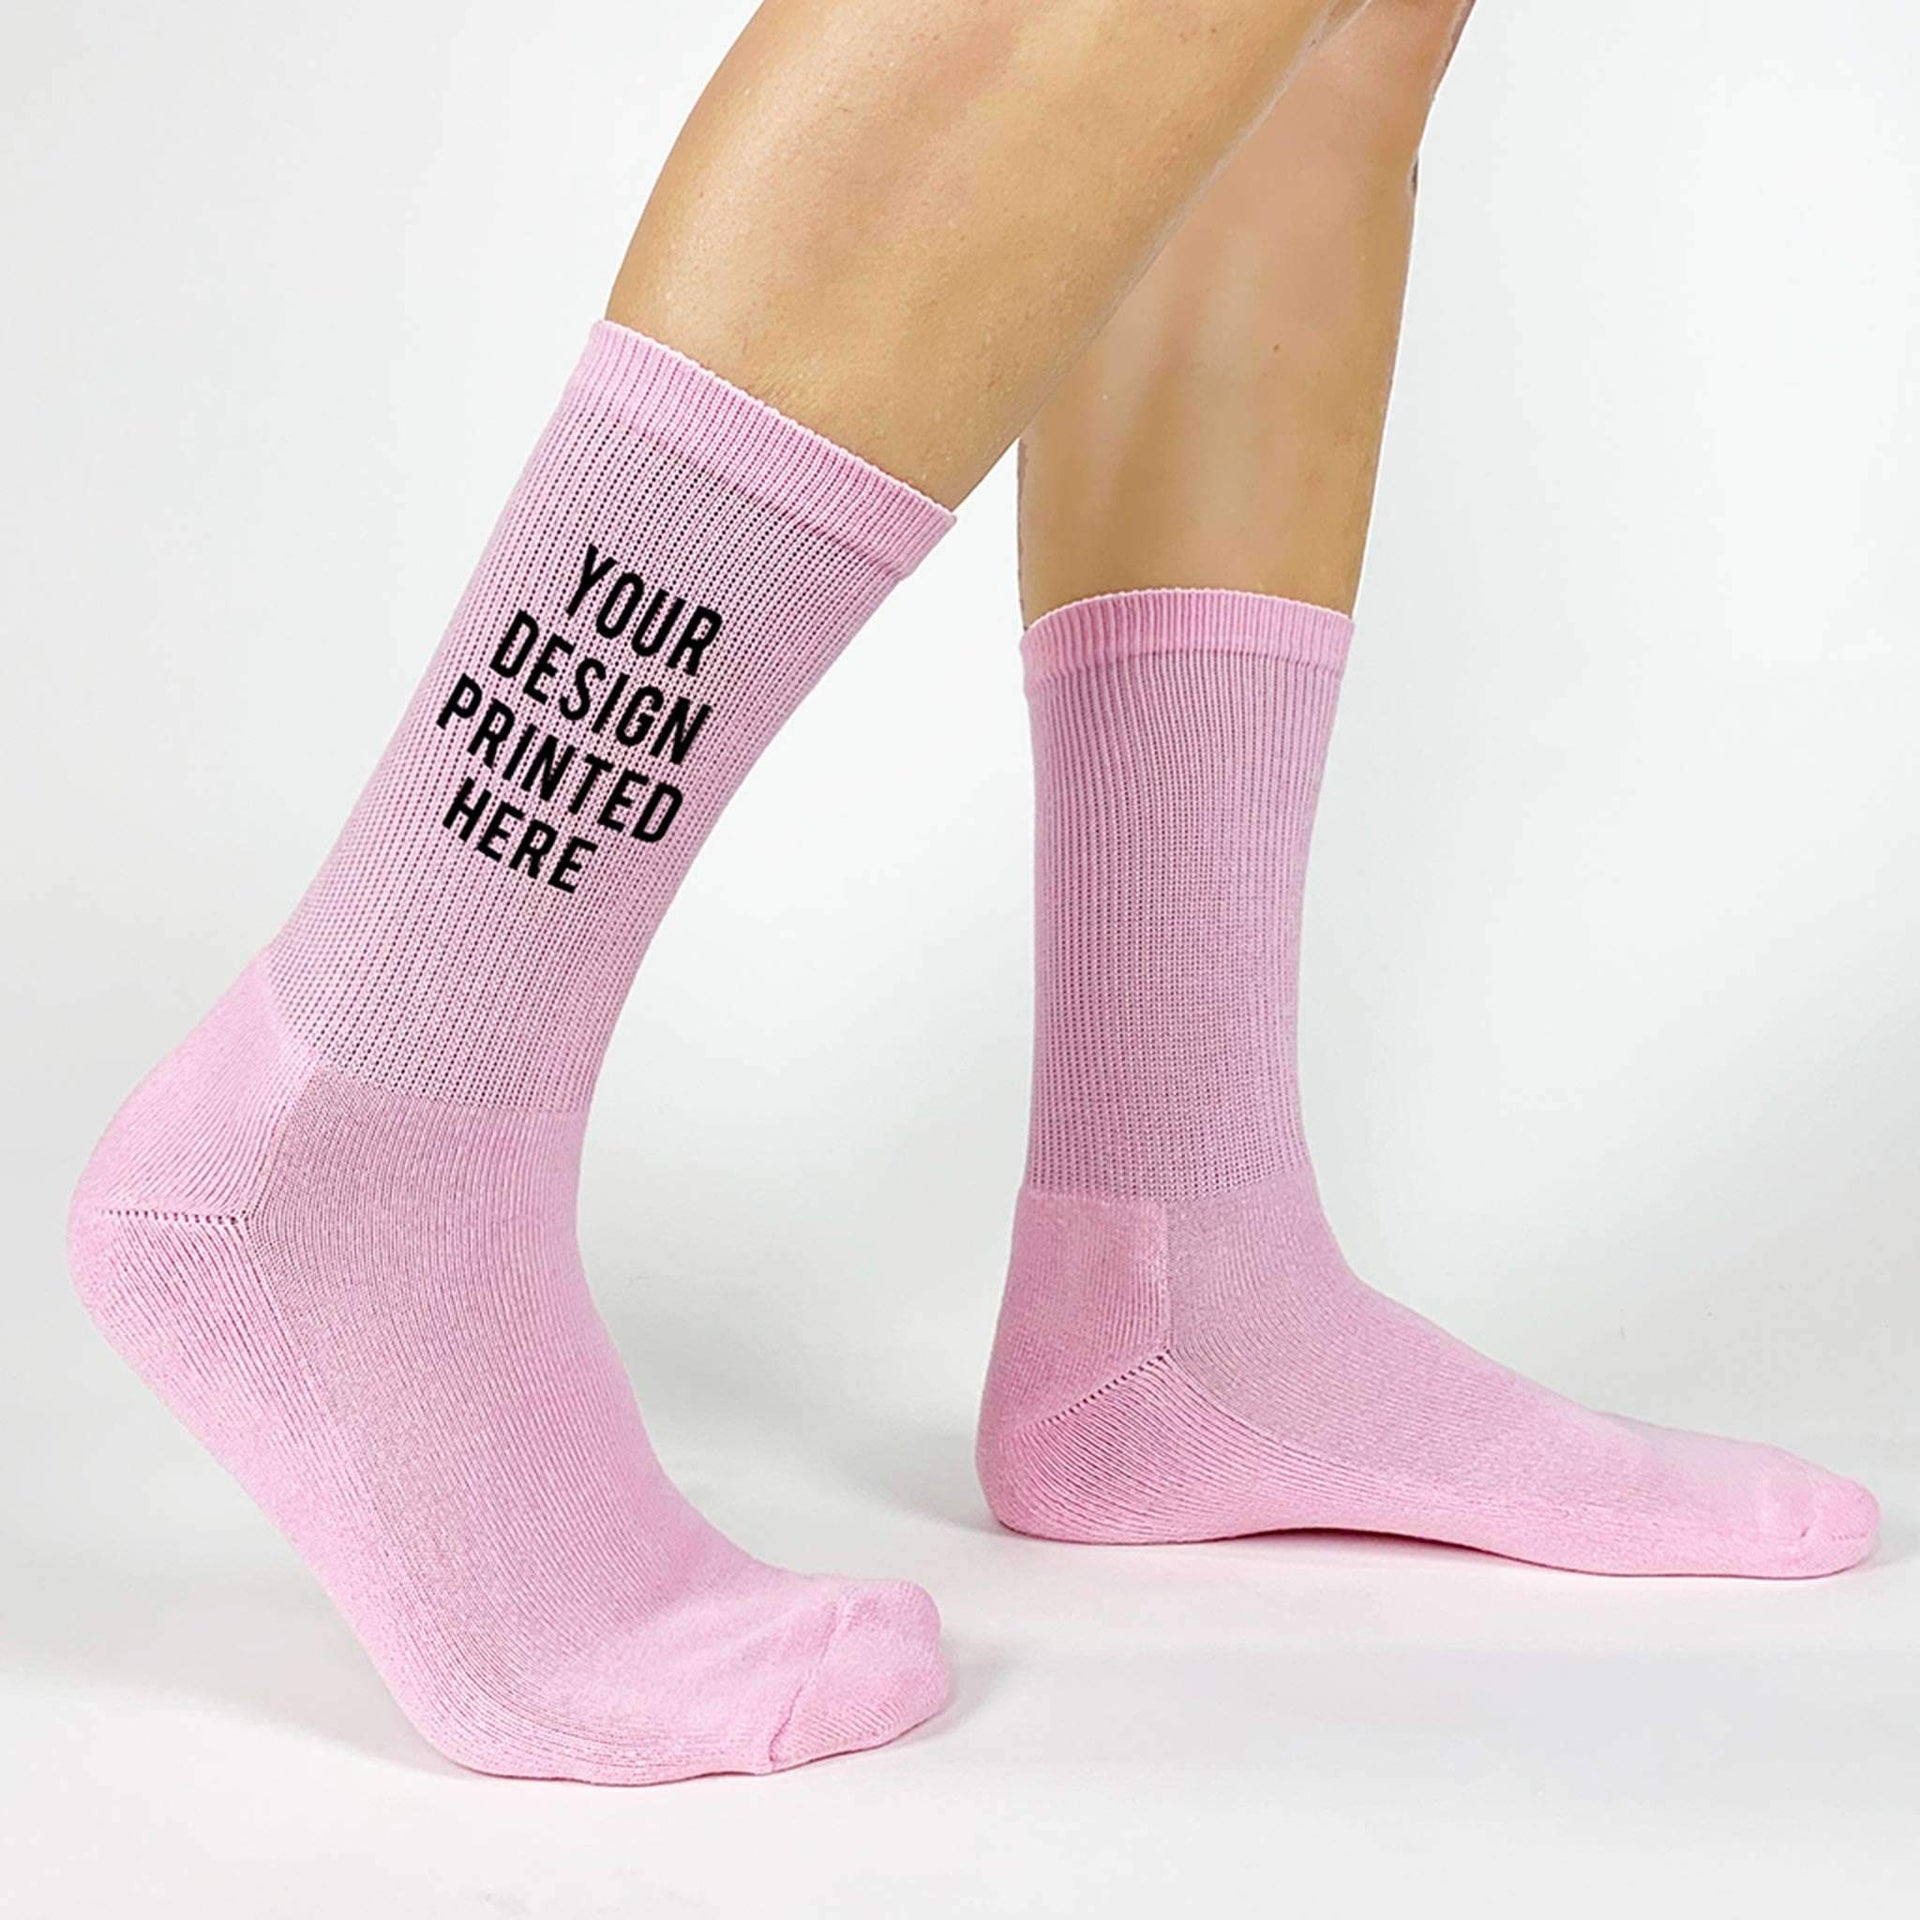 Custom printed pink cotton crew socks create your own design.